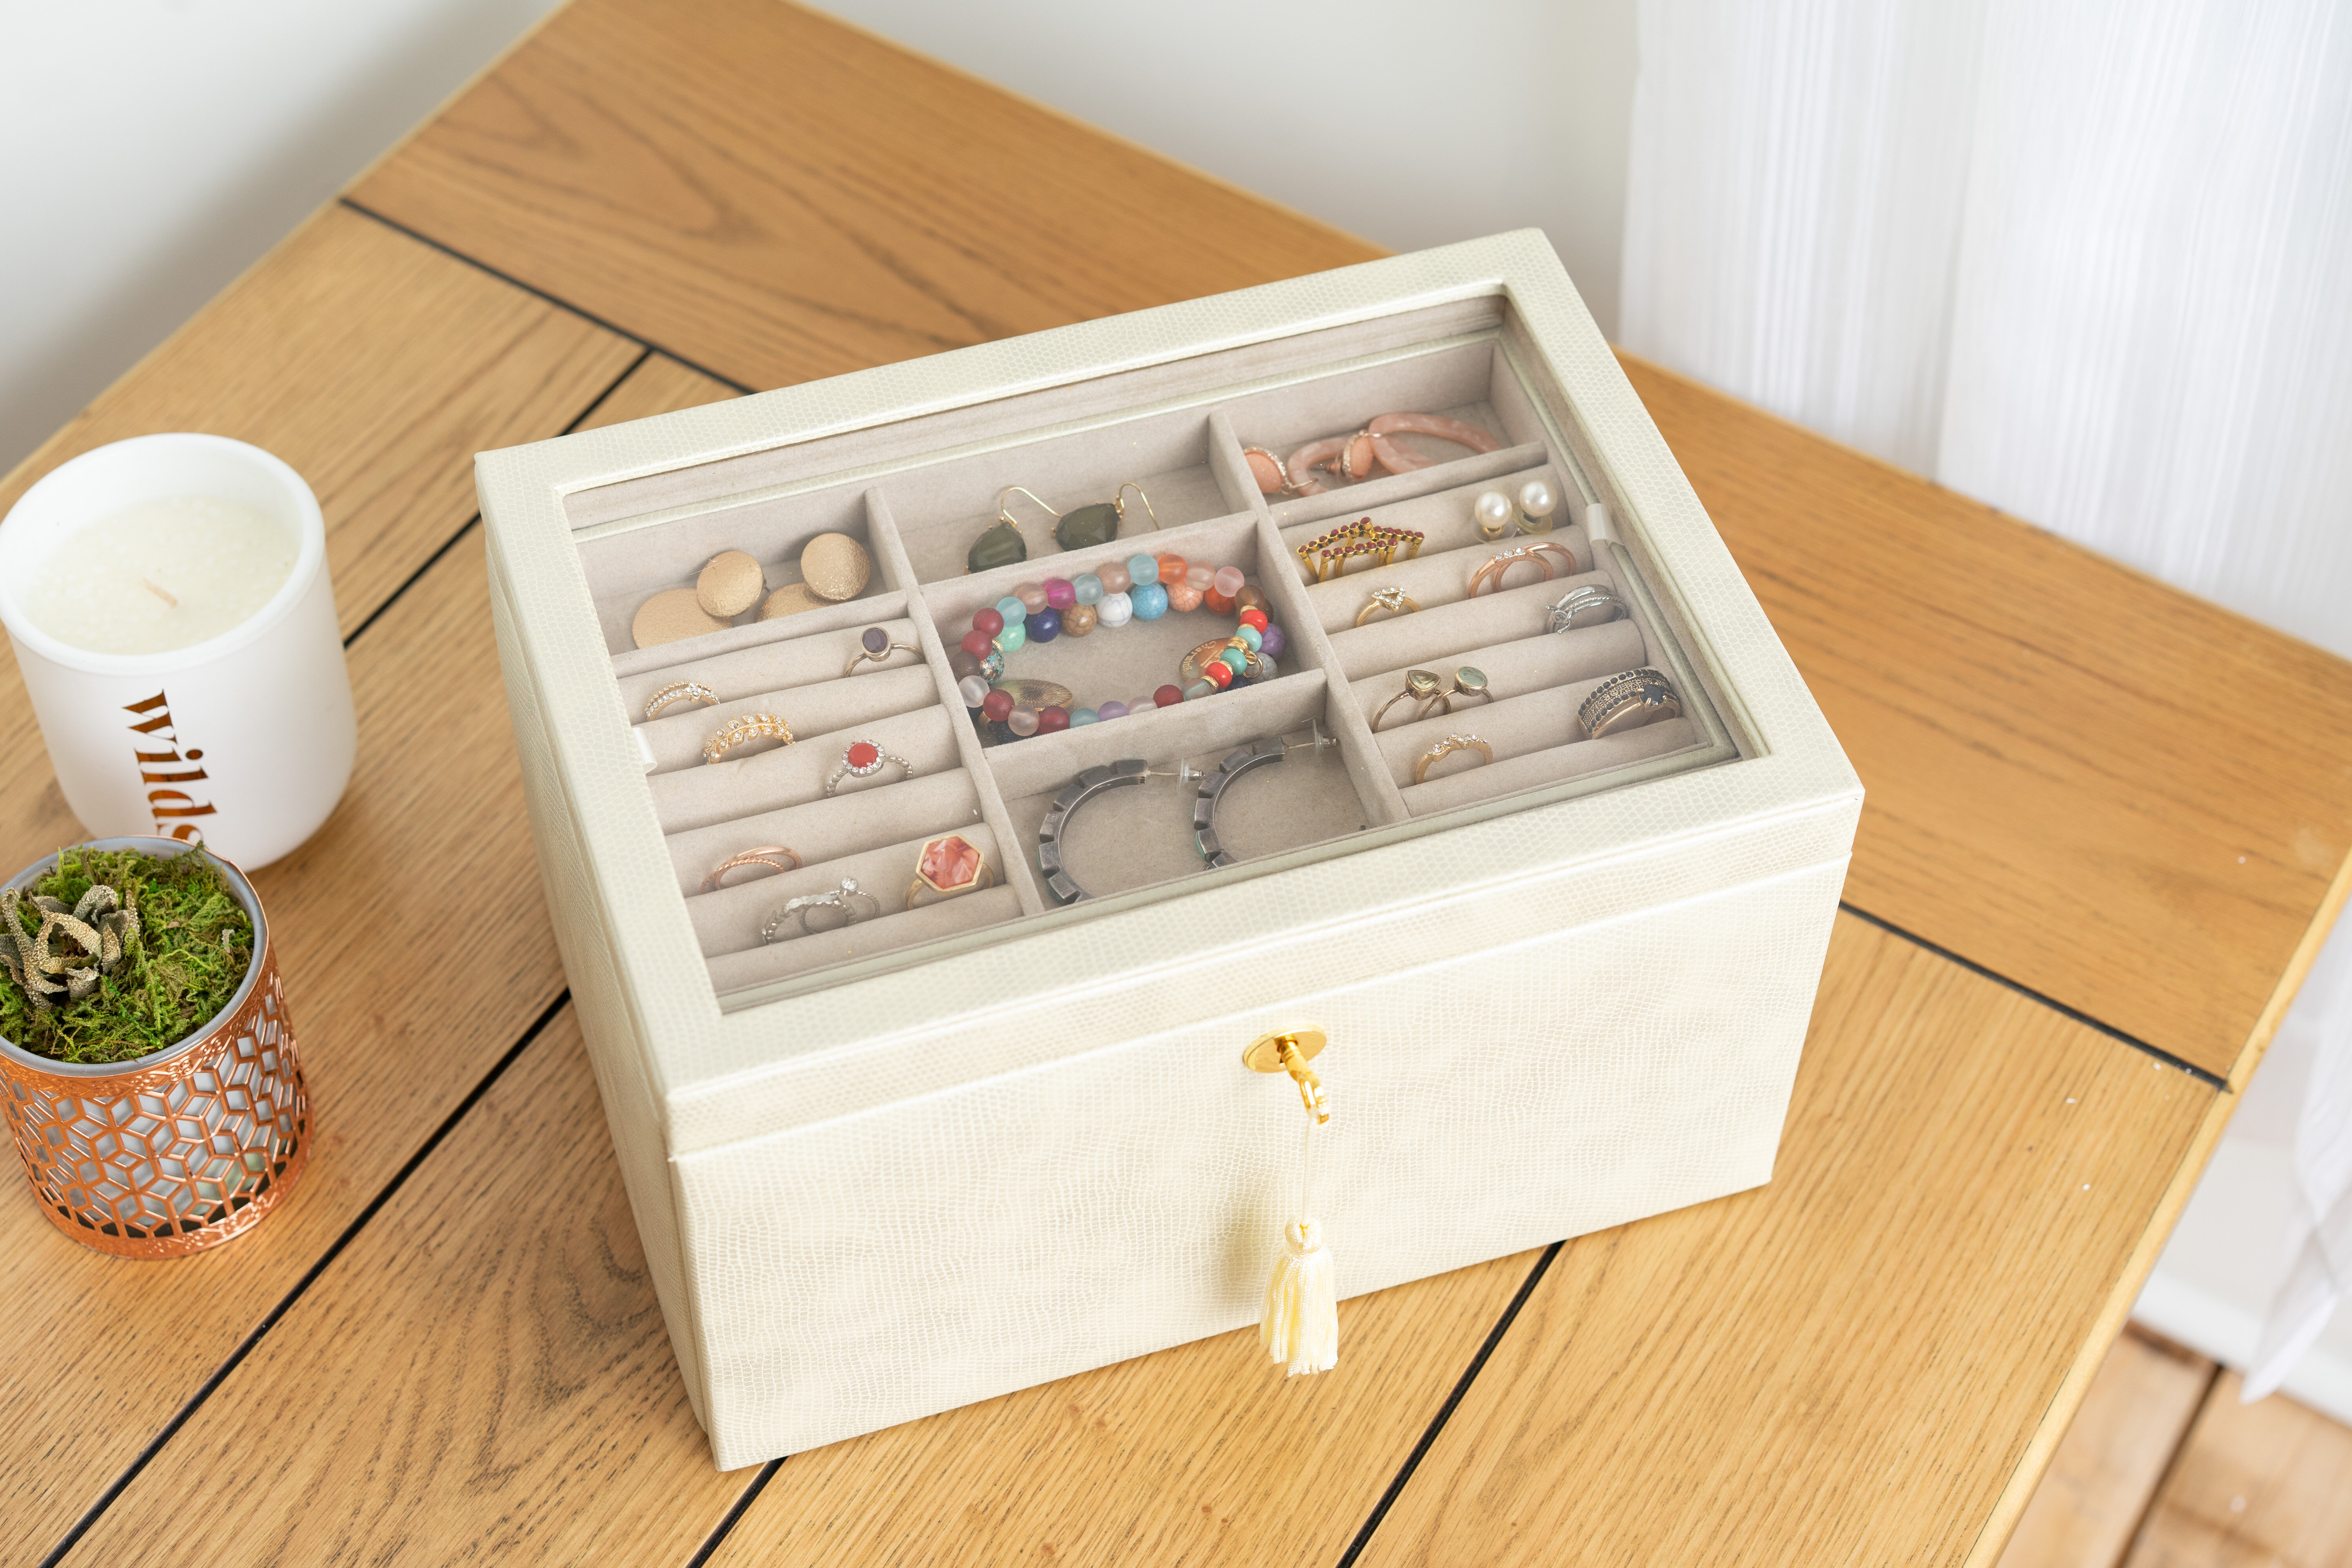 Canora Grey Wood Jewelry Box +